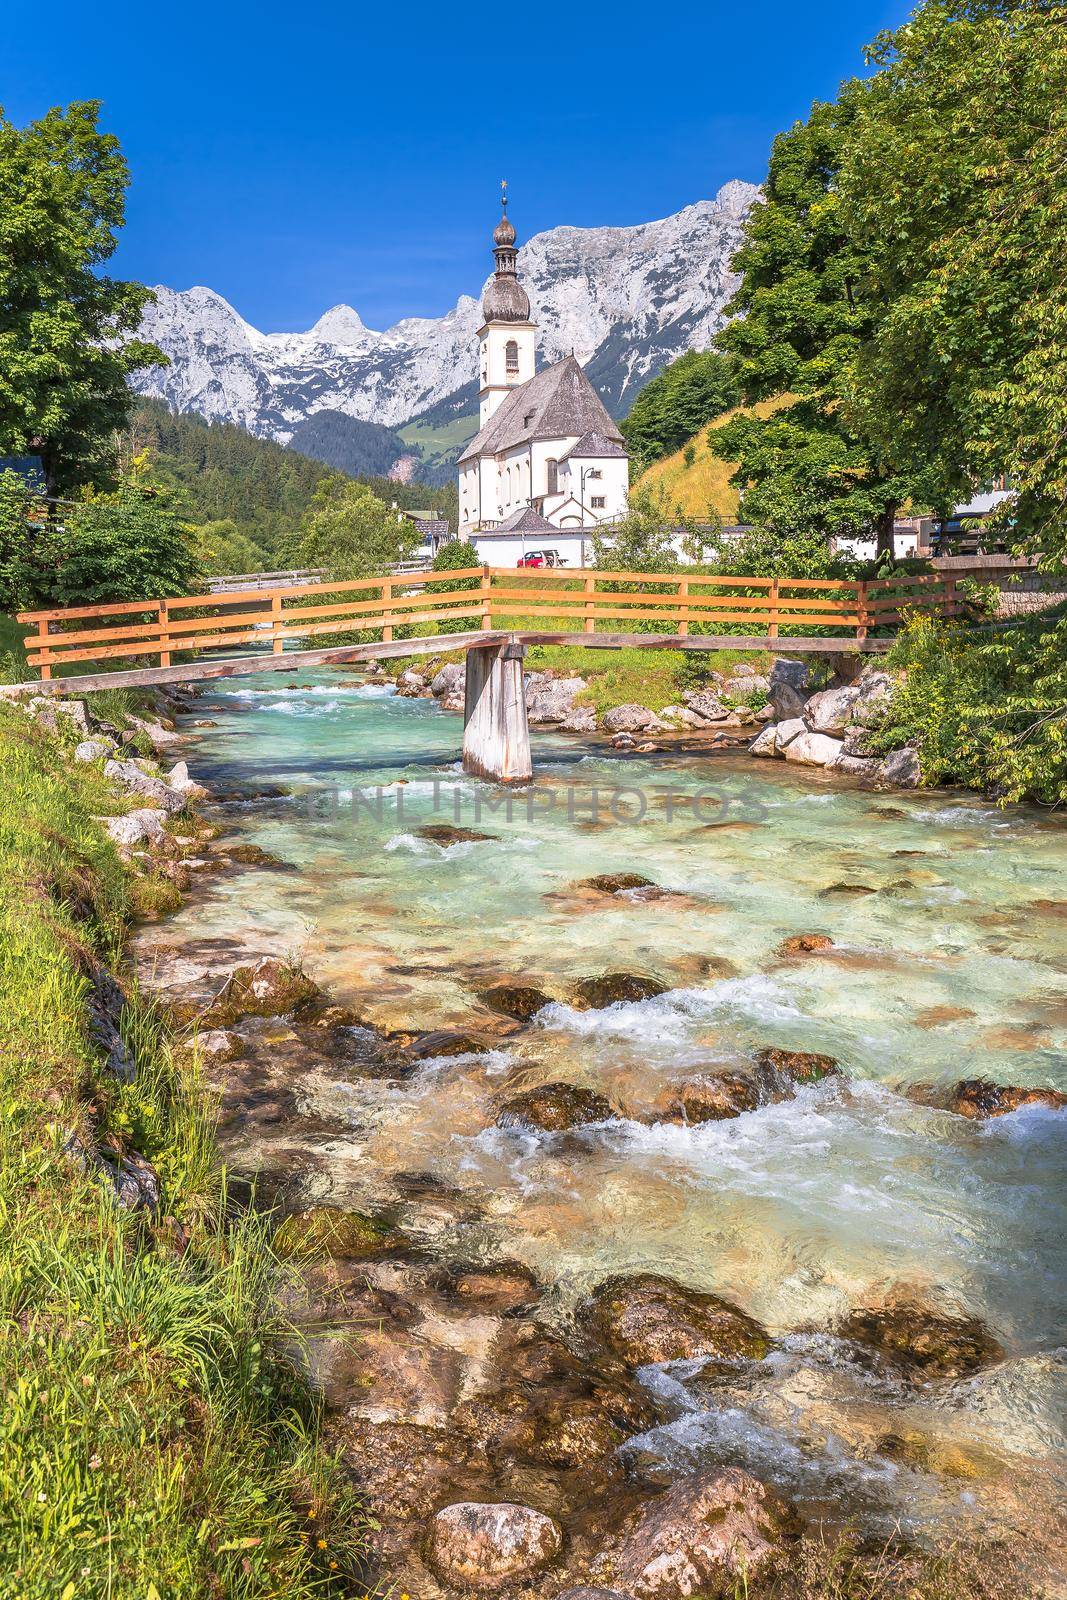 Sankt Sebastian pilgrimage church with alpine turquoise river alpine landscape view, Ramsau by xbrchx